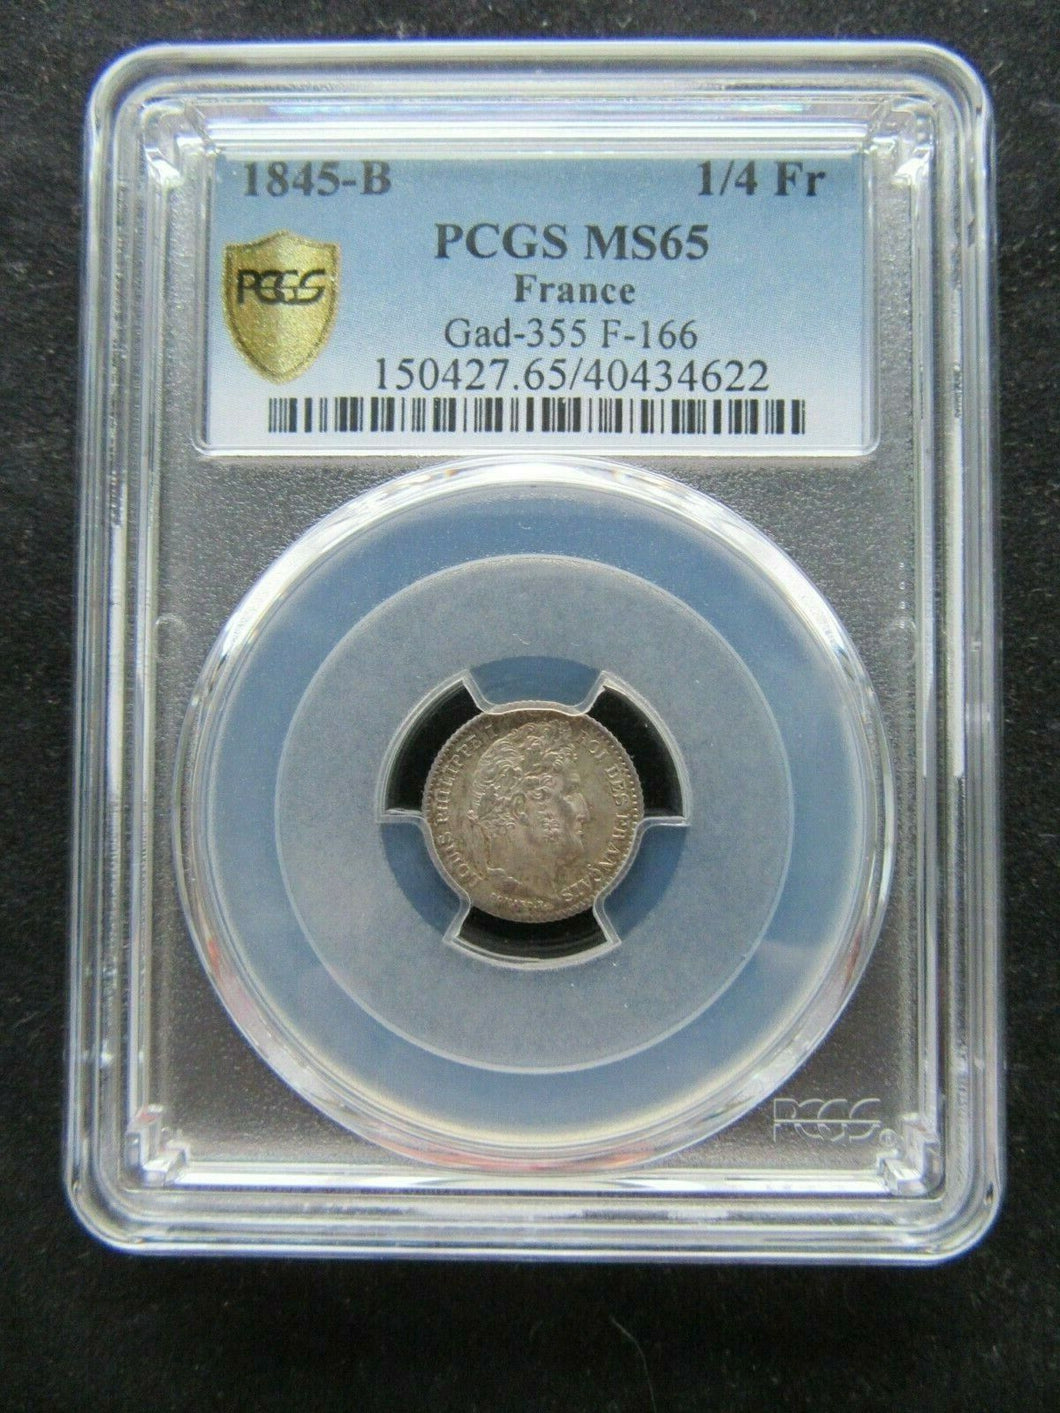 25 Cent Argent Louis Philippe 1845 B ; PCGS : MS 65 ; FDC